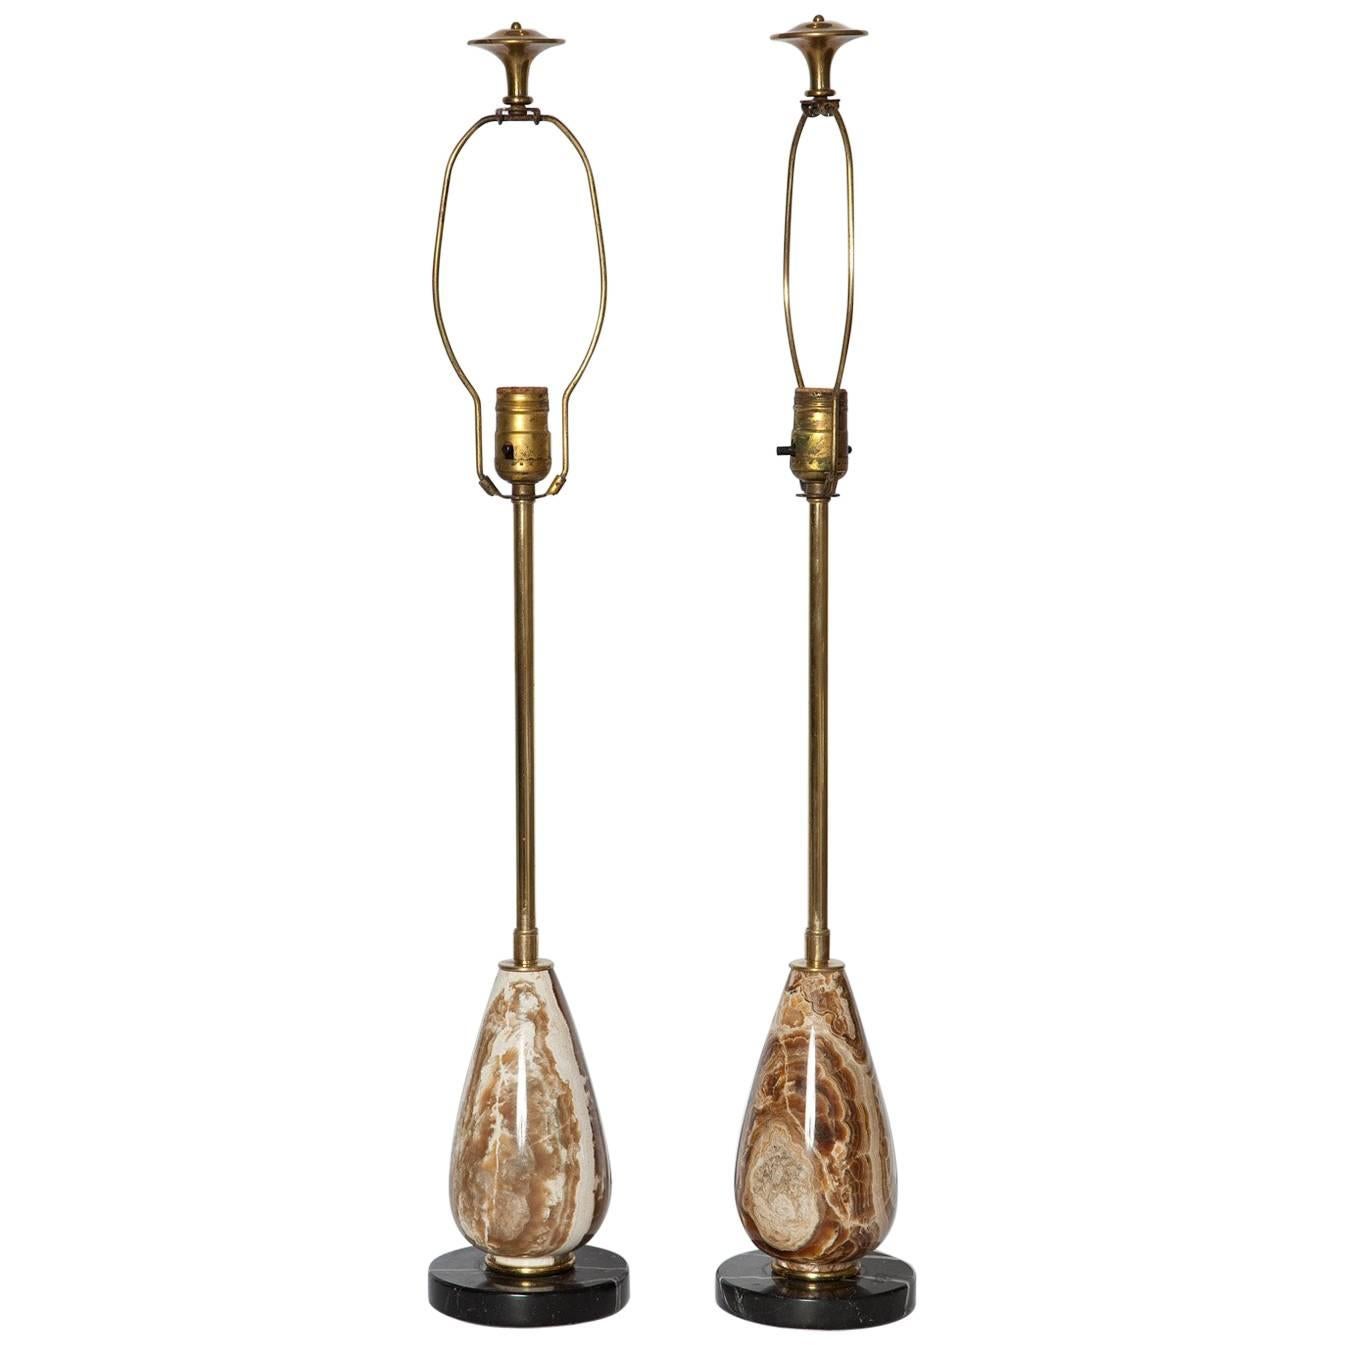 Pair of Diminutive Onyx Table Lamps, circa 1950